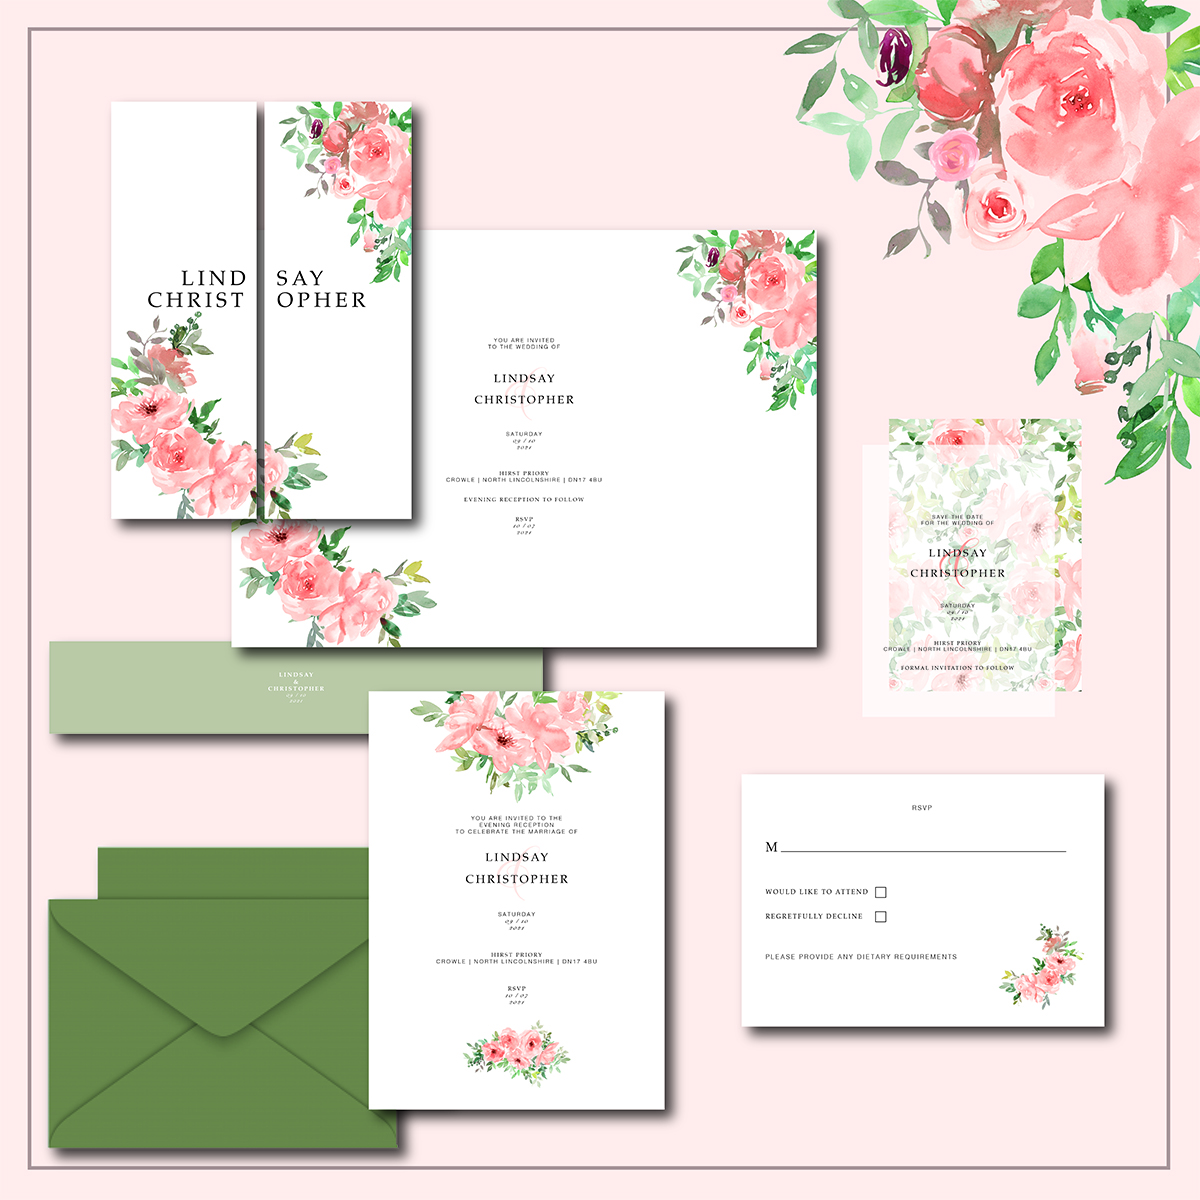 Peach Floral Wedding Invitations | Wedding Stationery - Gate-fold Wedding Invitations - The Jasmine Cottage Studio gallery image 1